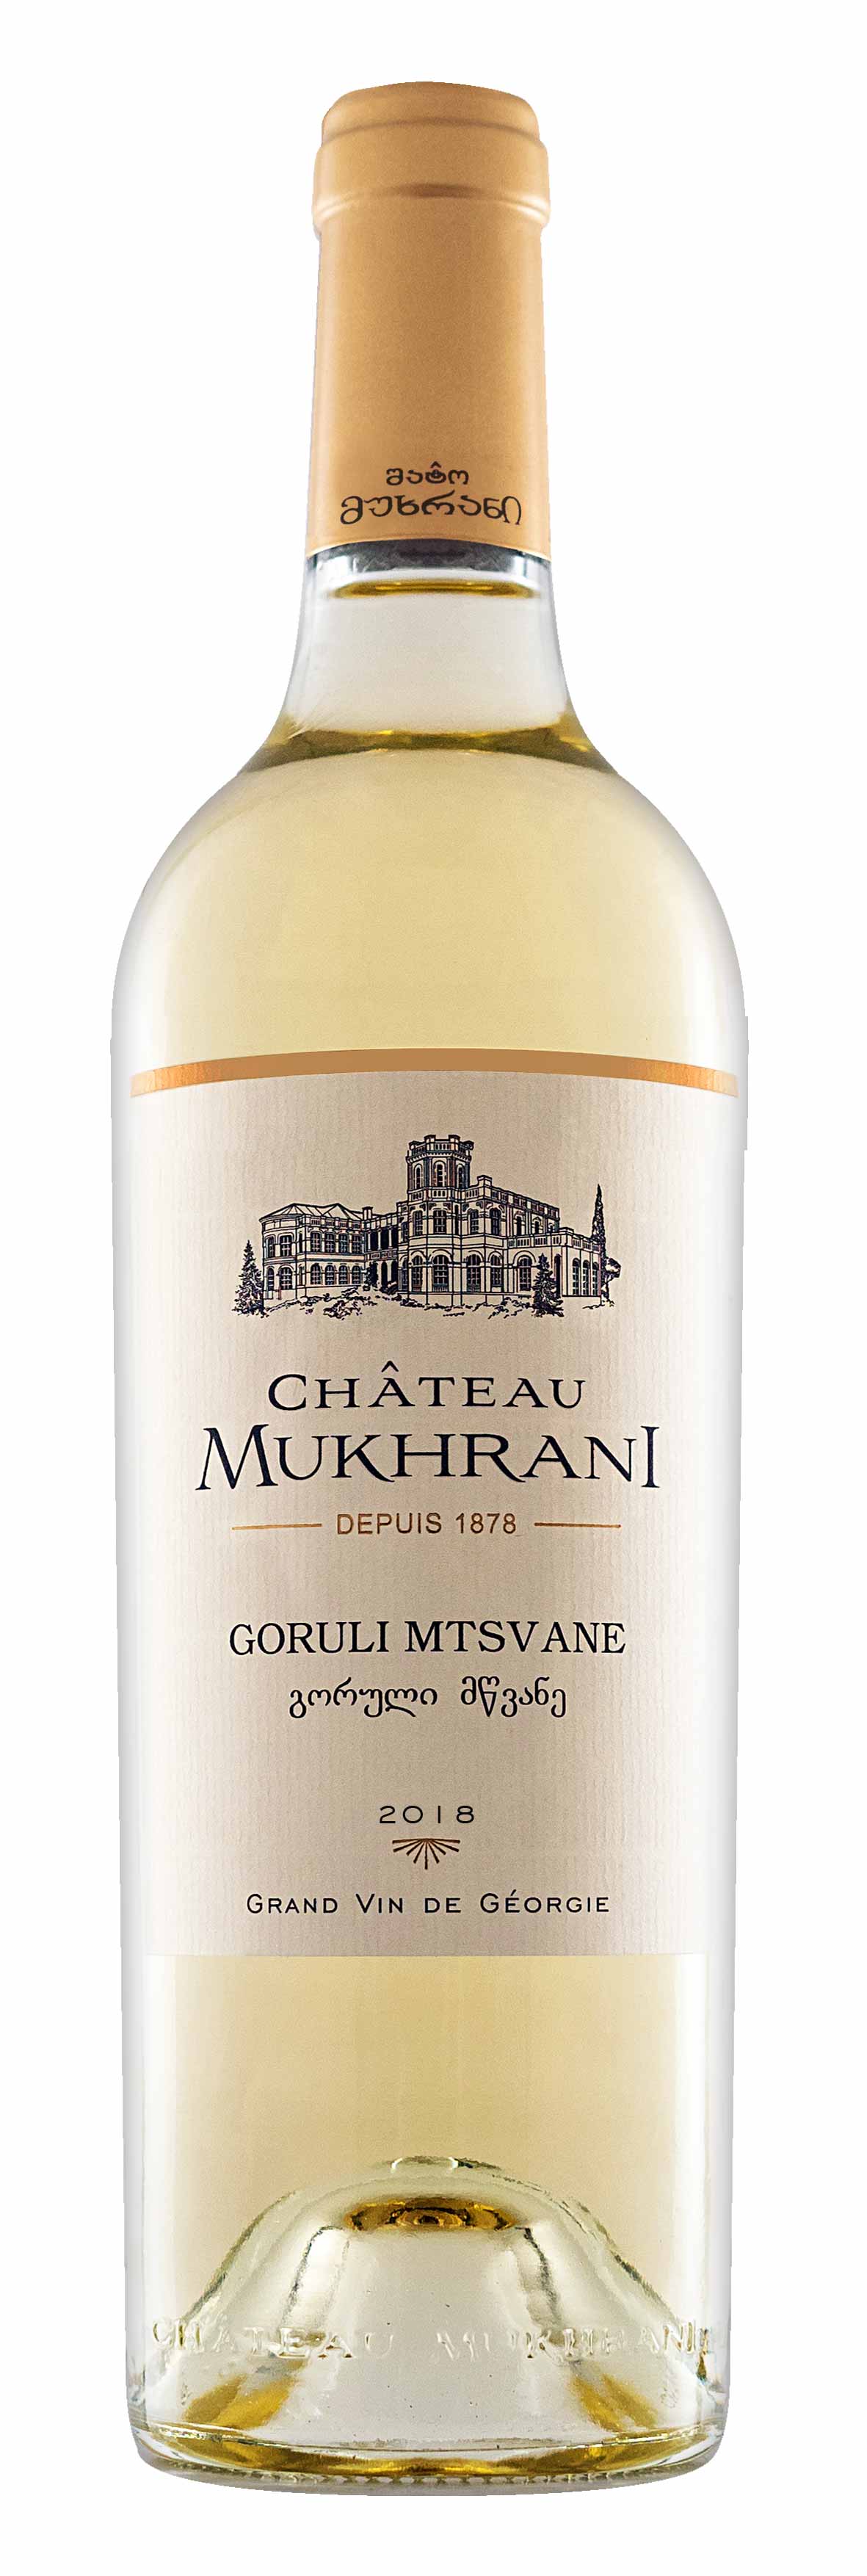 Château Mukhrani Goruli Mtsvane 2018 Weisswein trocken Georgien